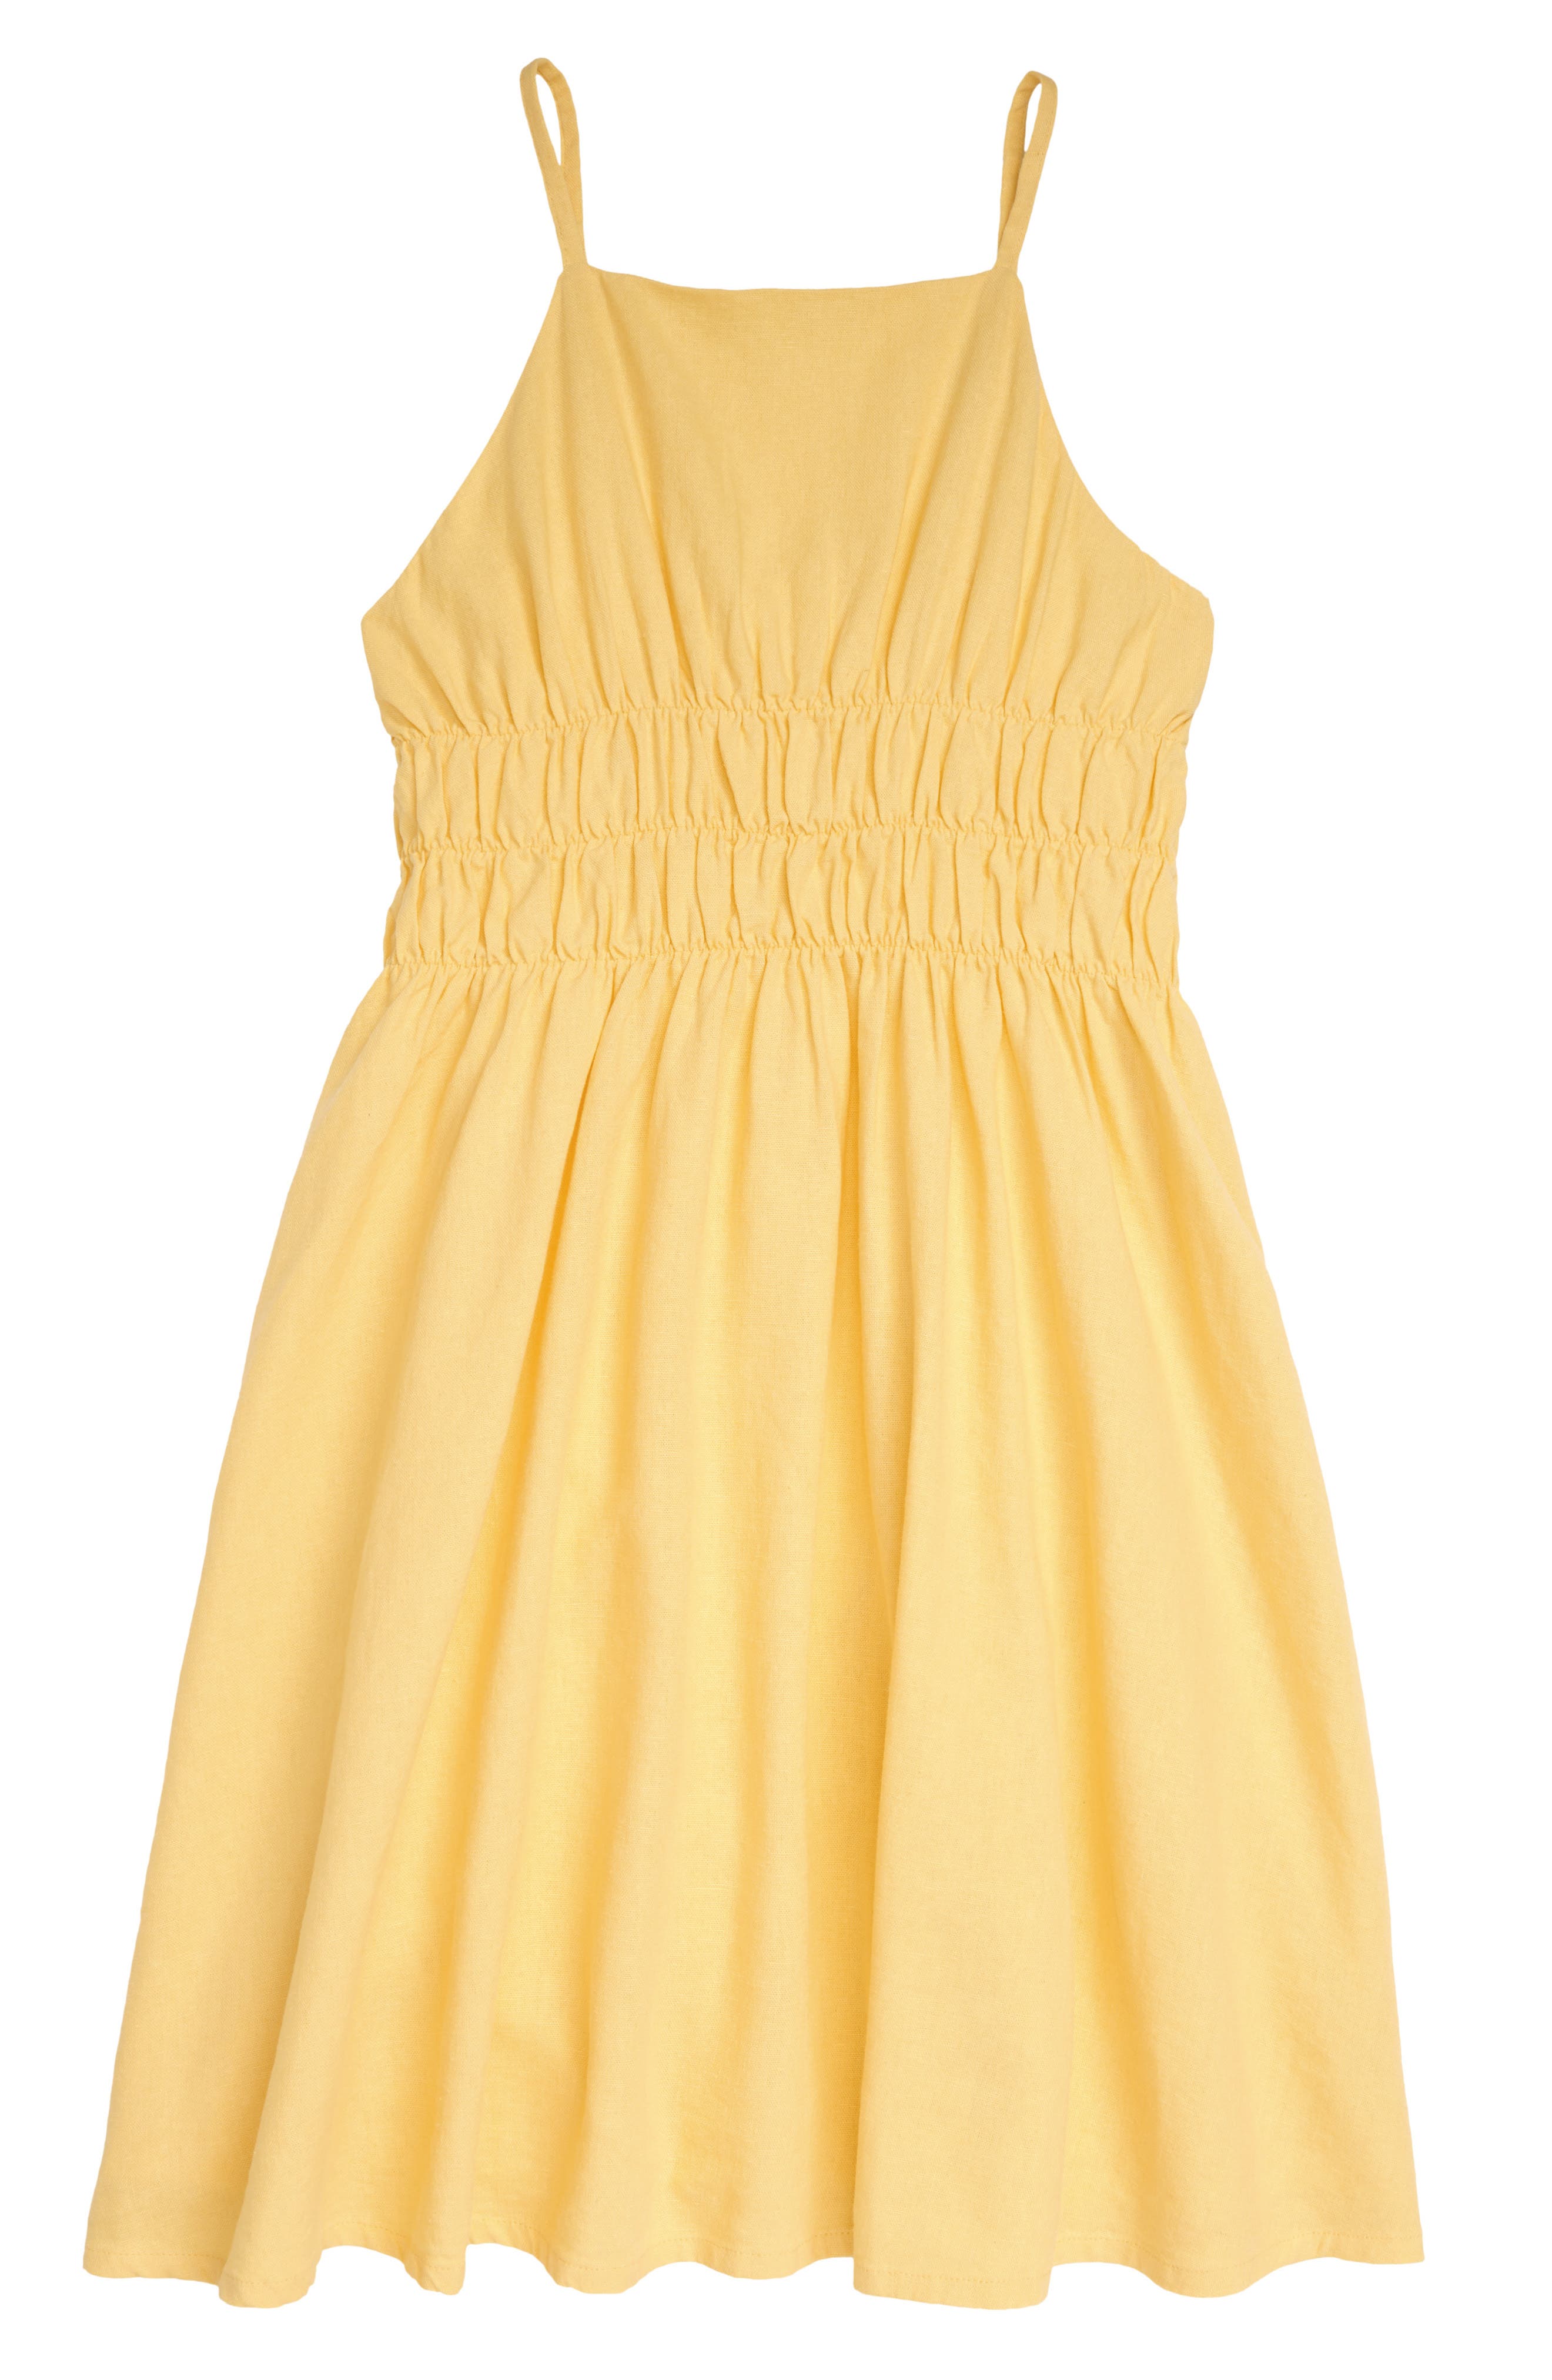 yellow dresses for tweens